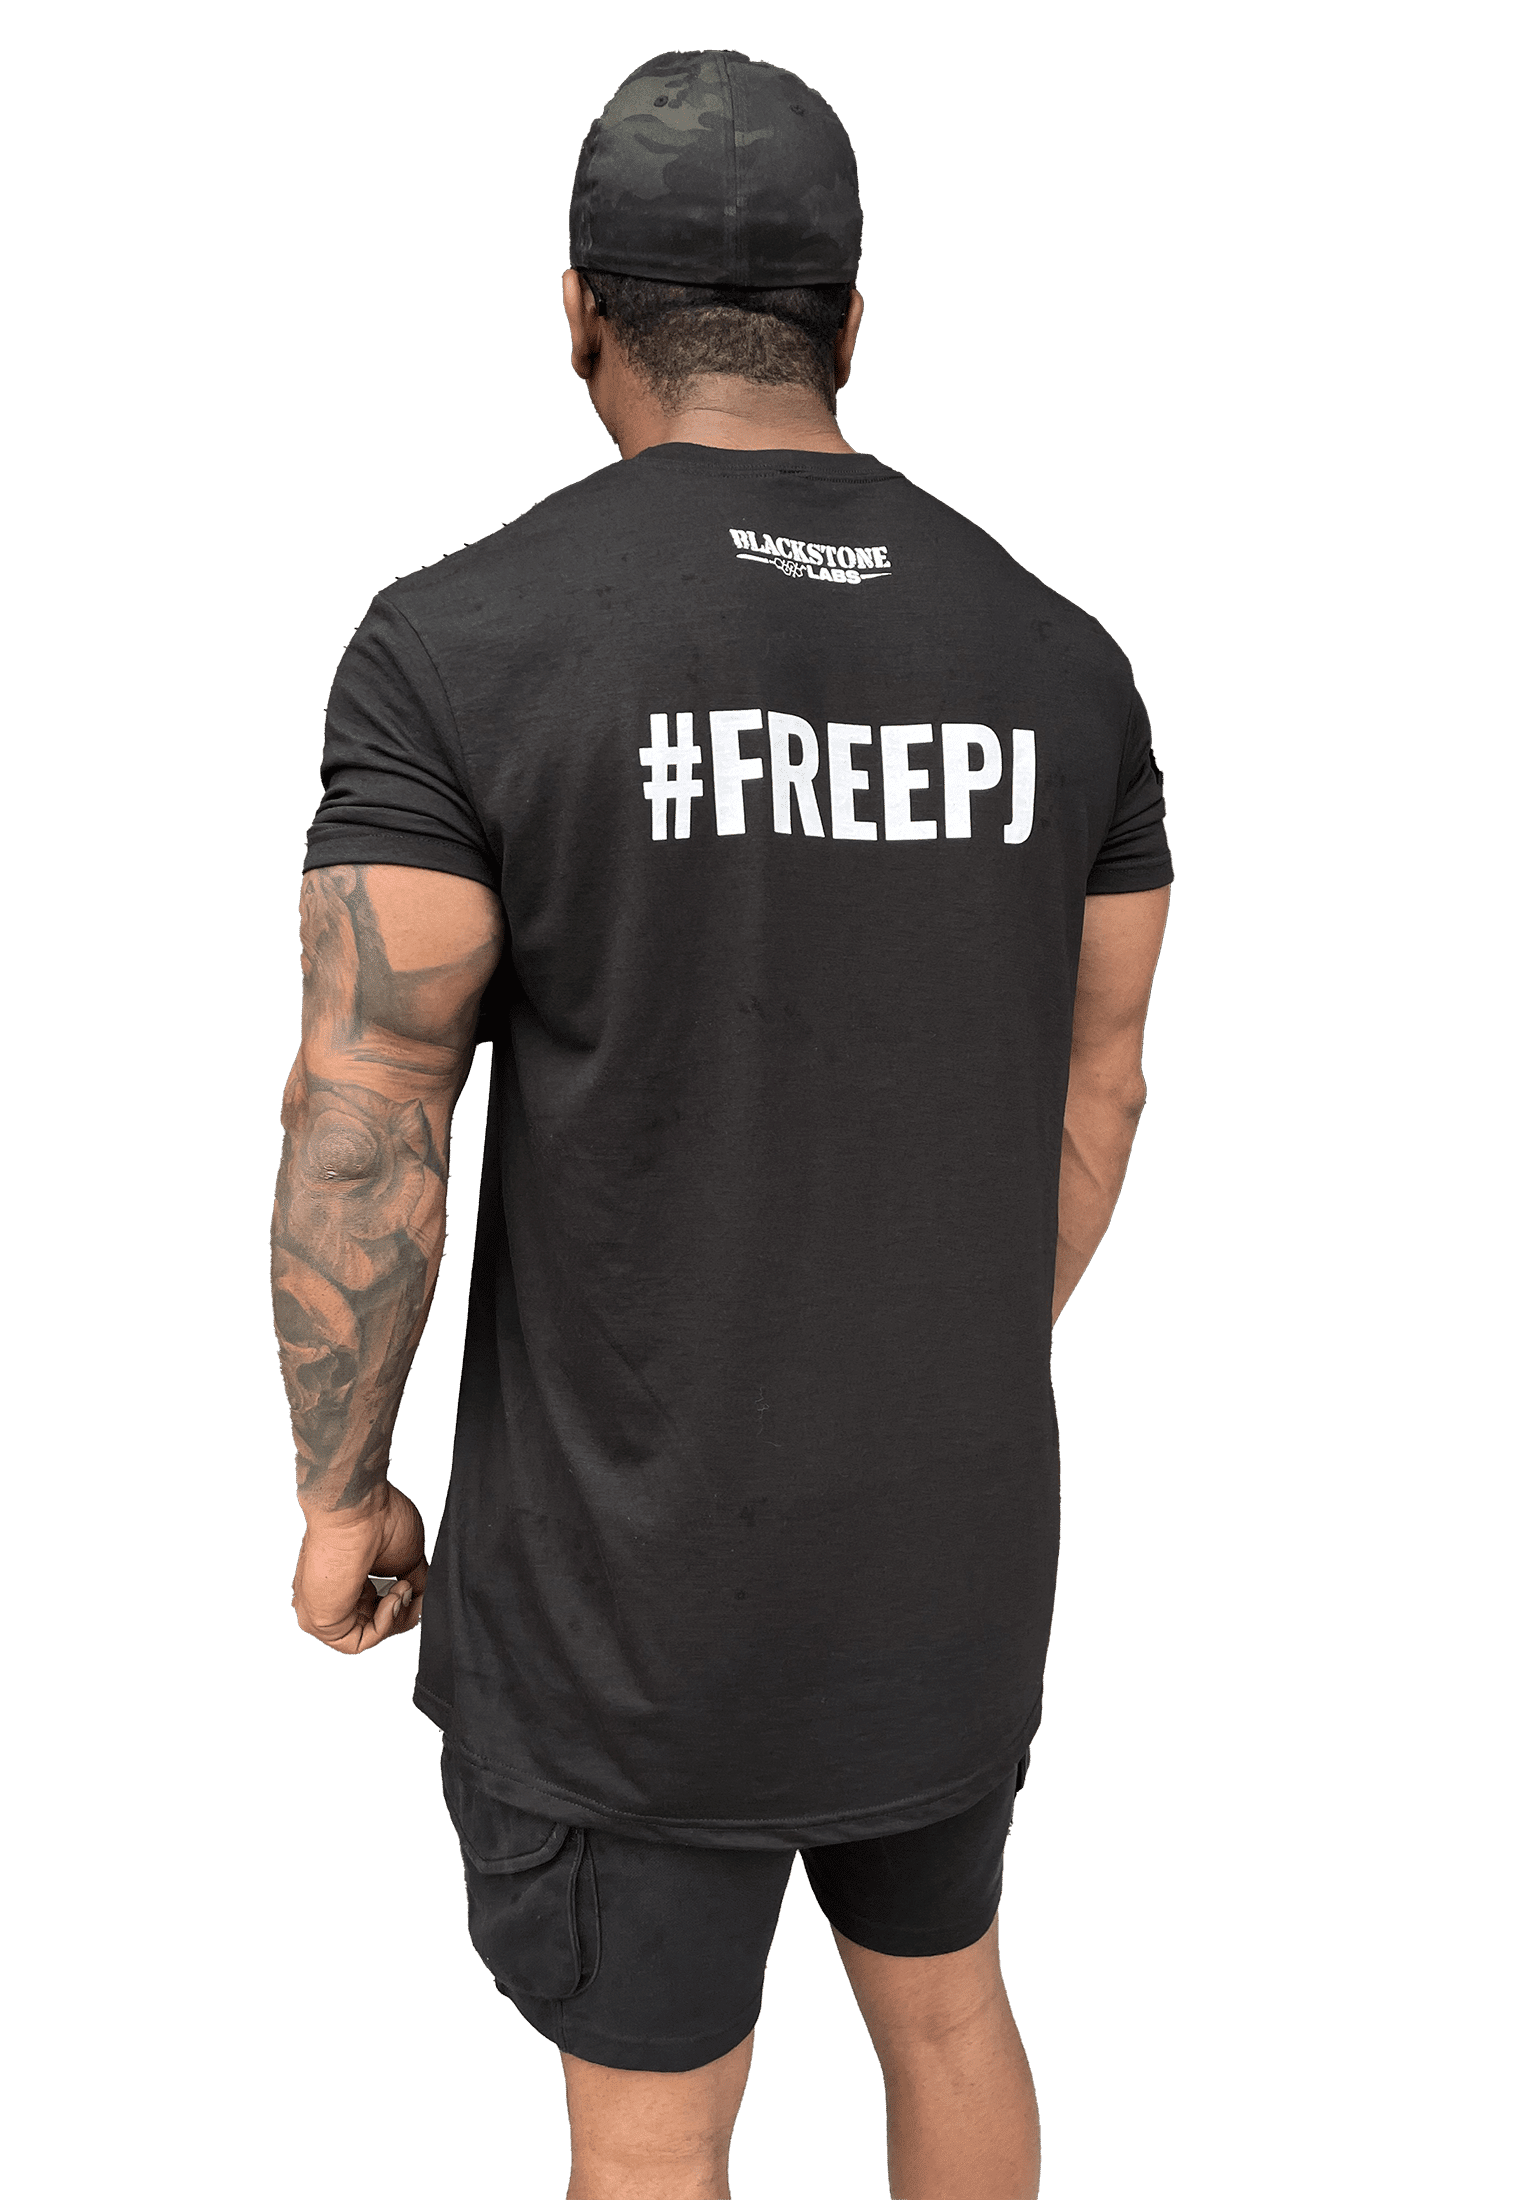 #FREEPJ Shirt | Blackstone Labs